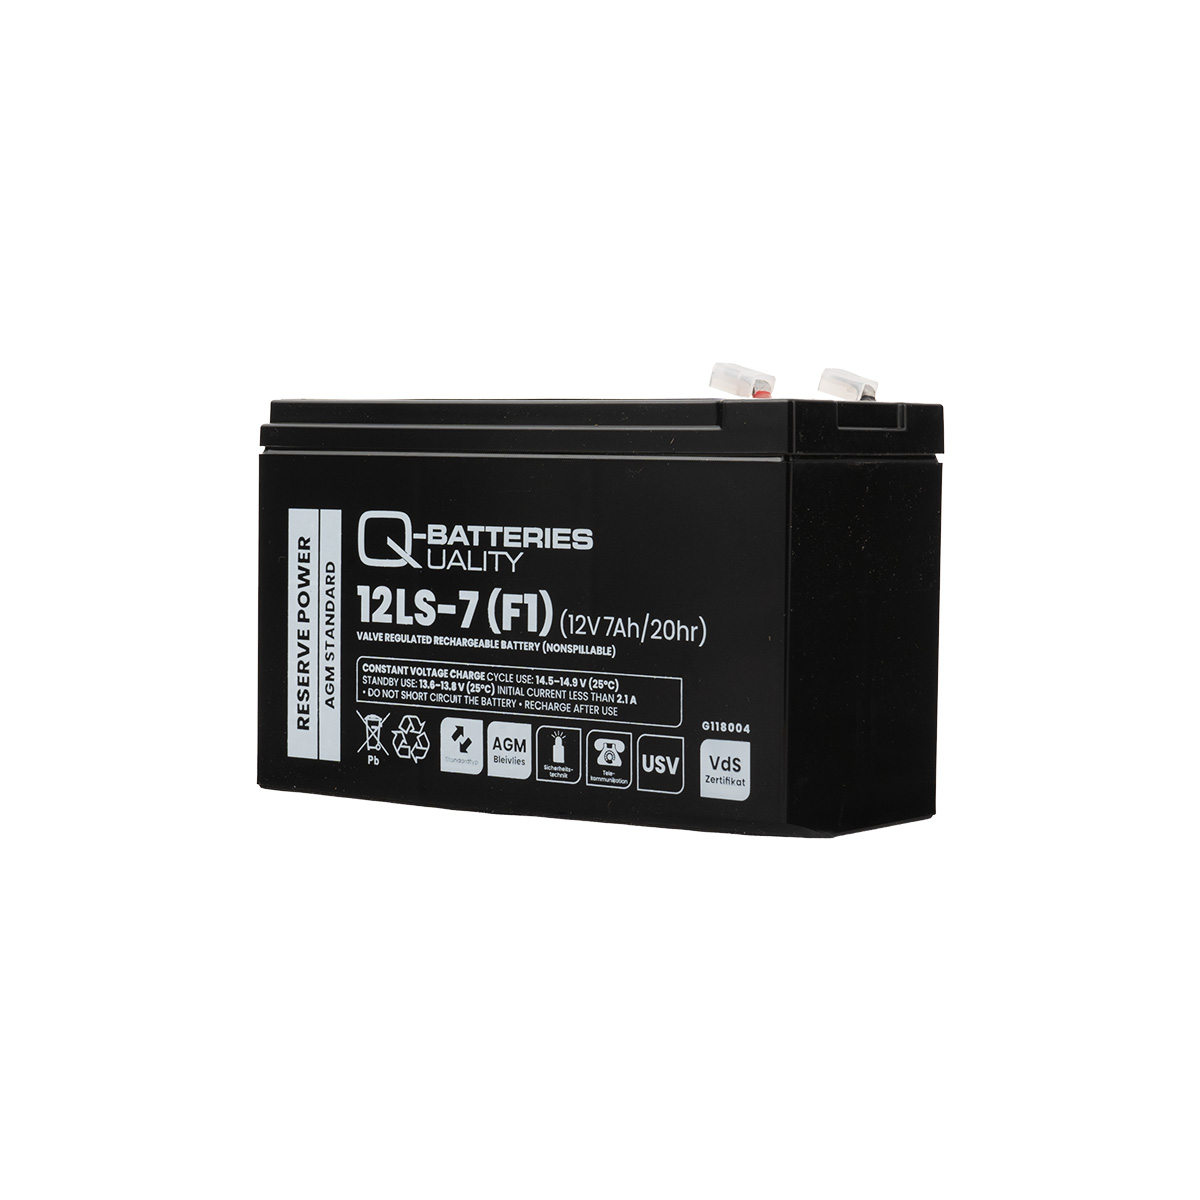 Q-Batteries 12LS-7 F1 12V 7Ah Blei-Vlies-Akku / AGM VRLA mit VdS G118004